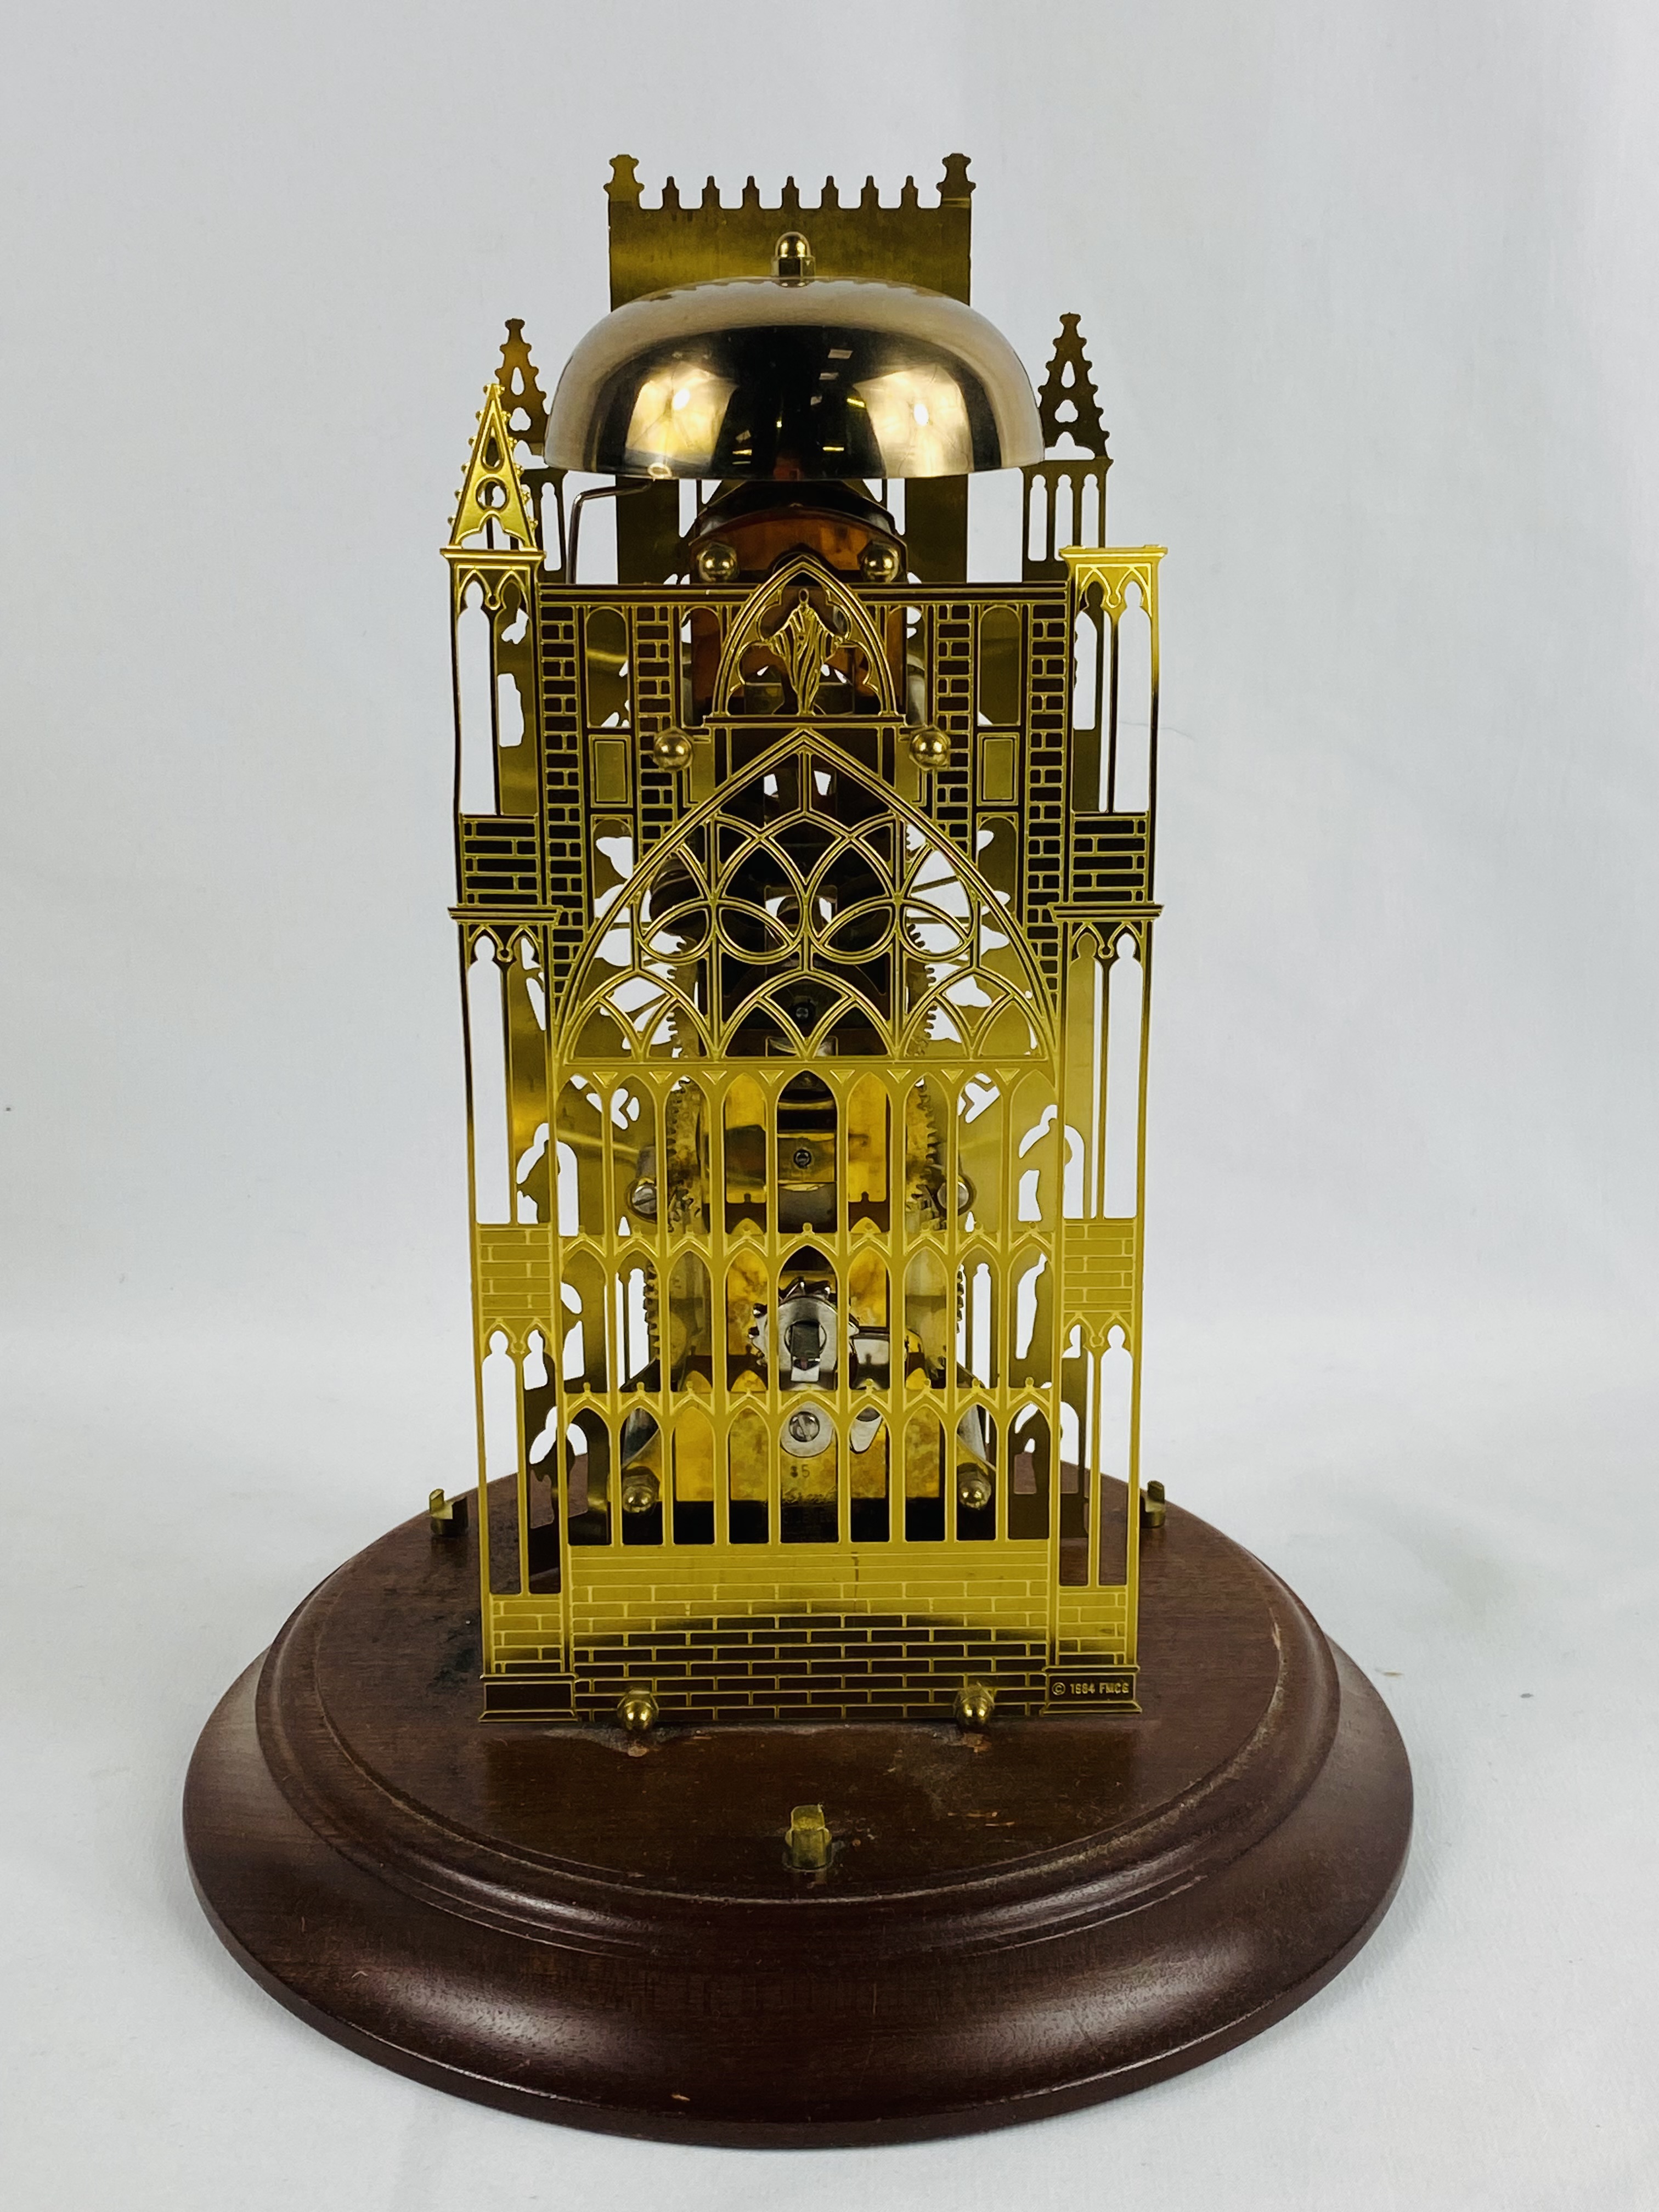 Brass skeleton clock on wood base - Image 4 of 6